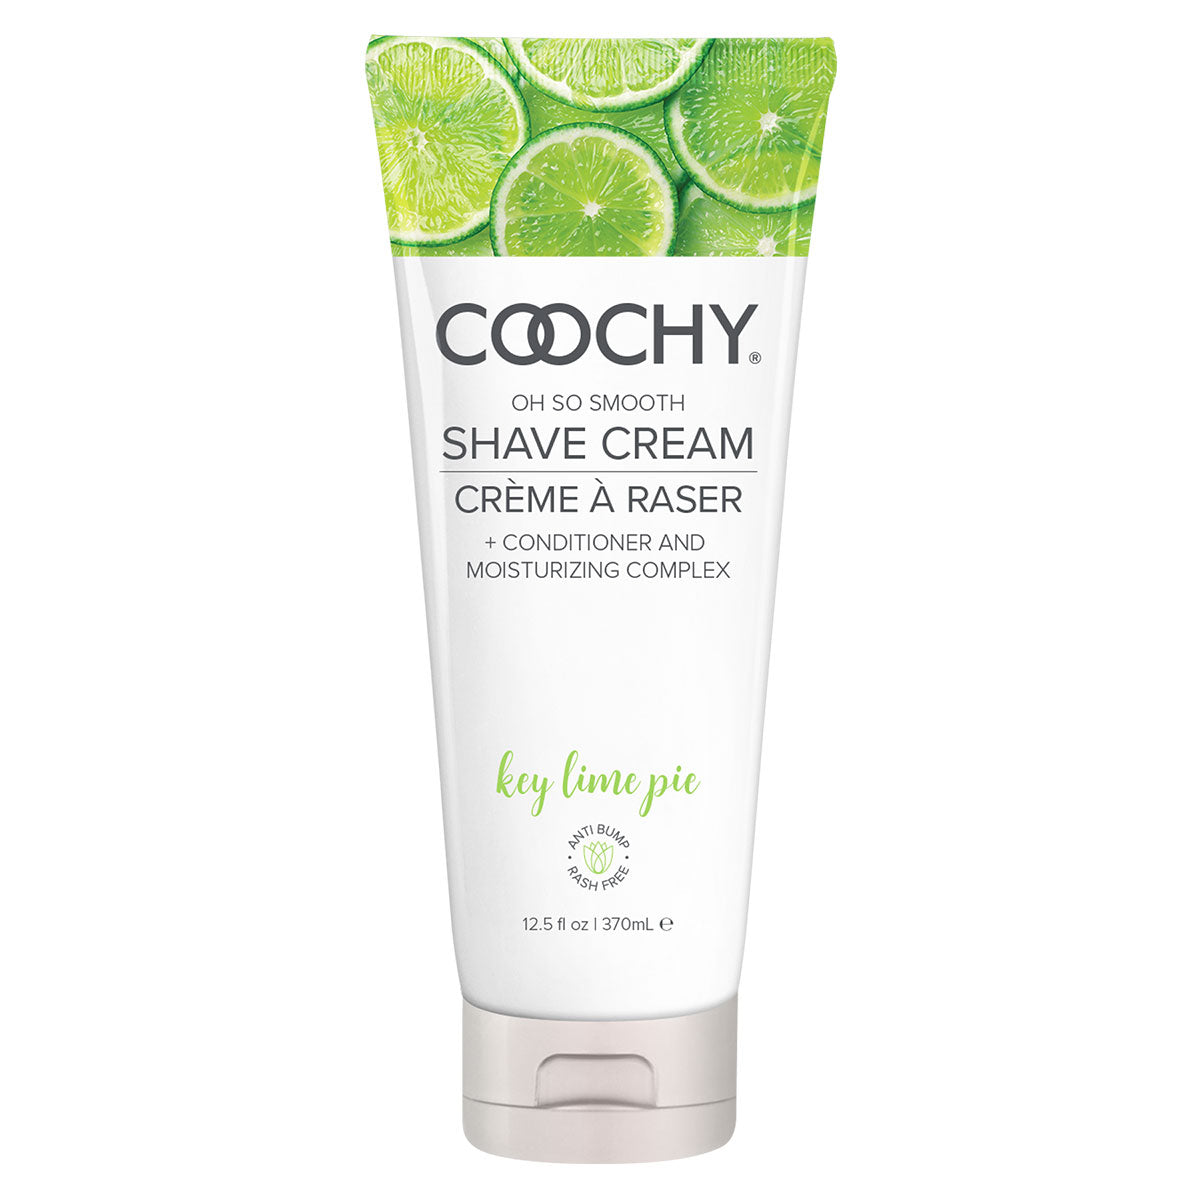 Coochy Shave Cream 12.5oz - Key Lime Pie